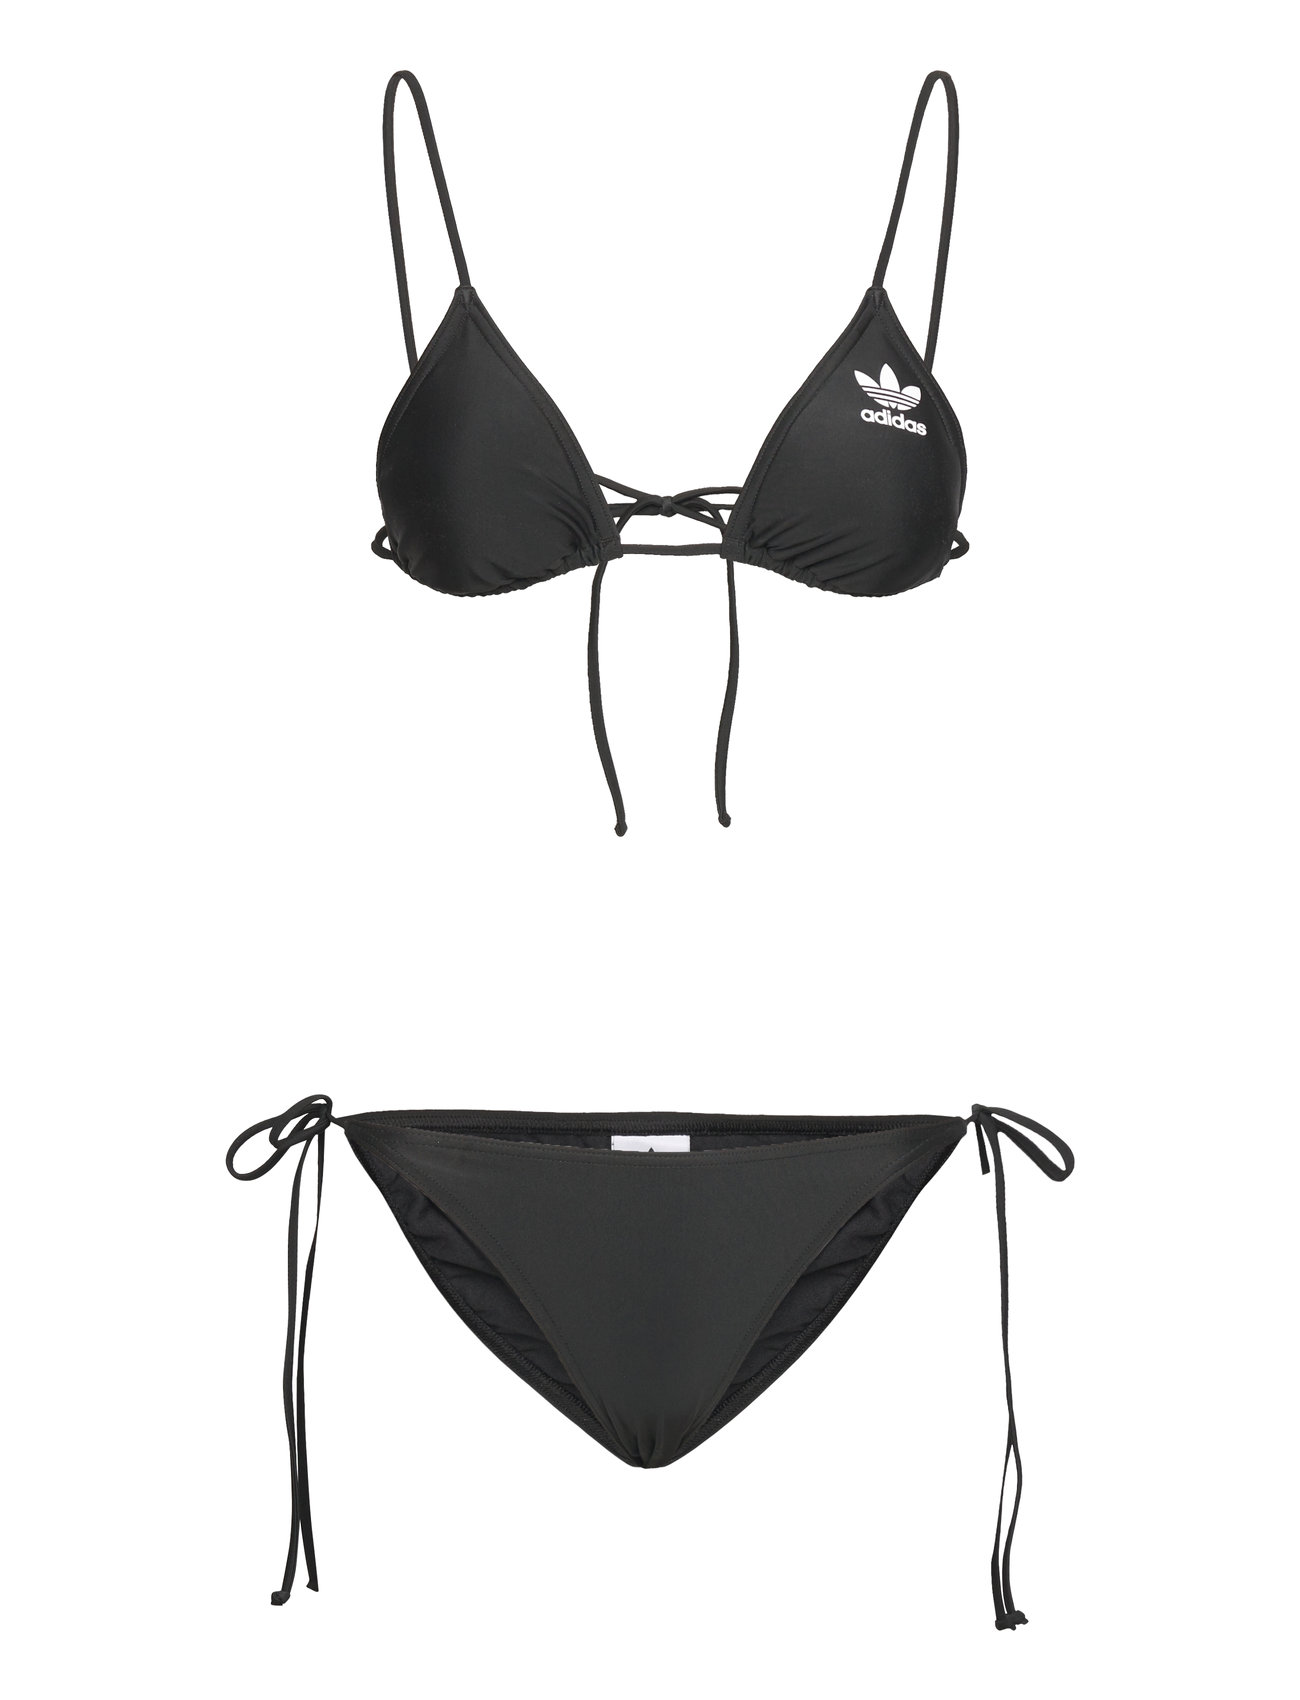 Adidas Performance Adicolor Triangle Bikini Bikini Sets